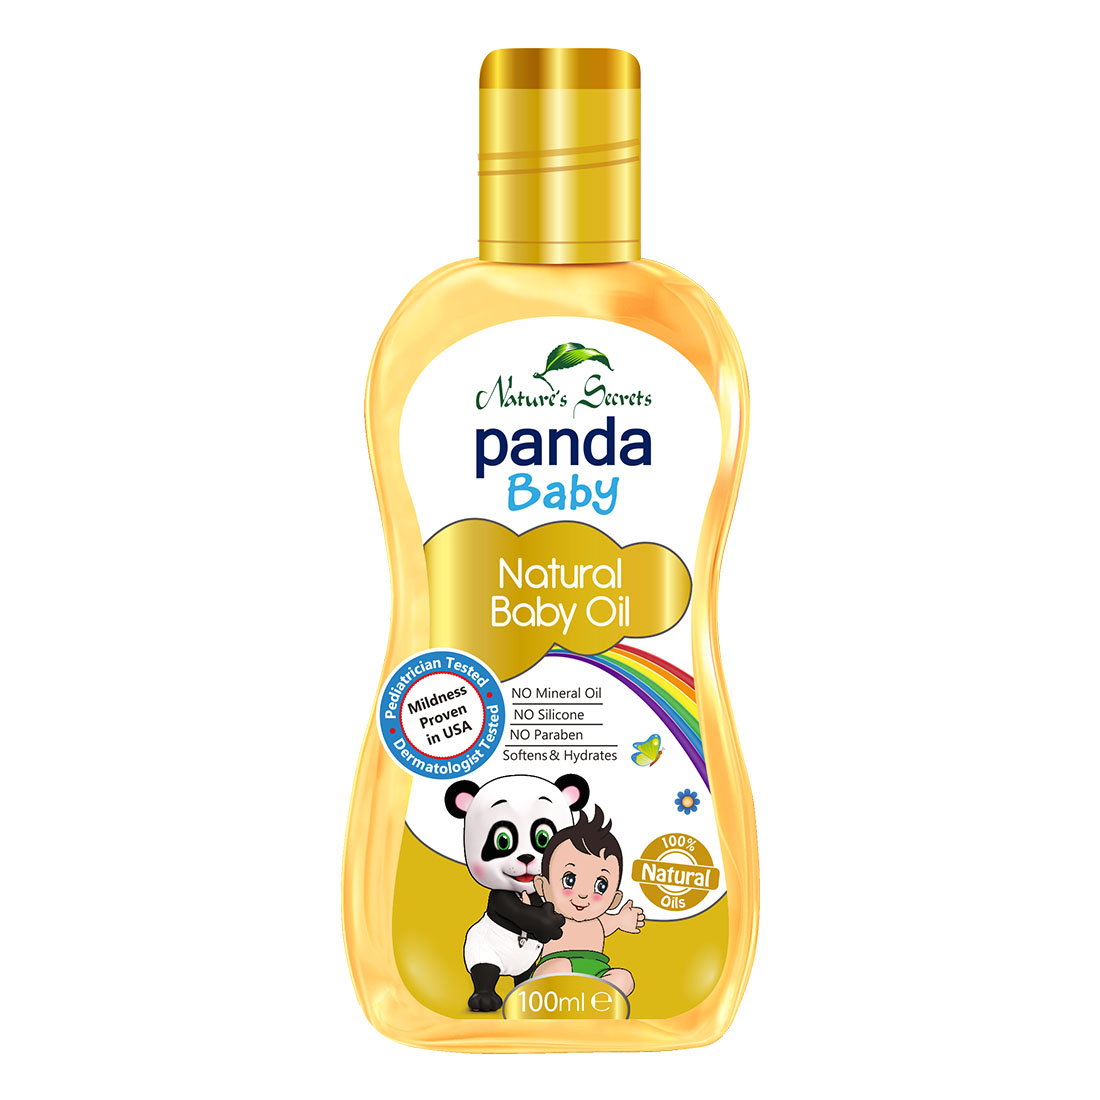 Panda Baby Natural Baby Oil - 100ml